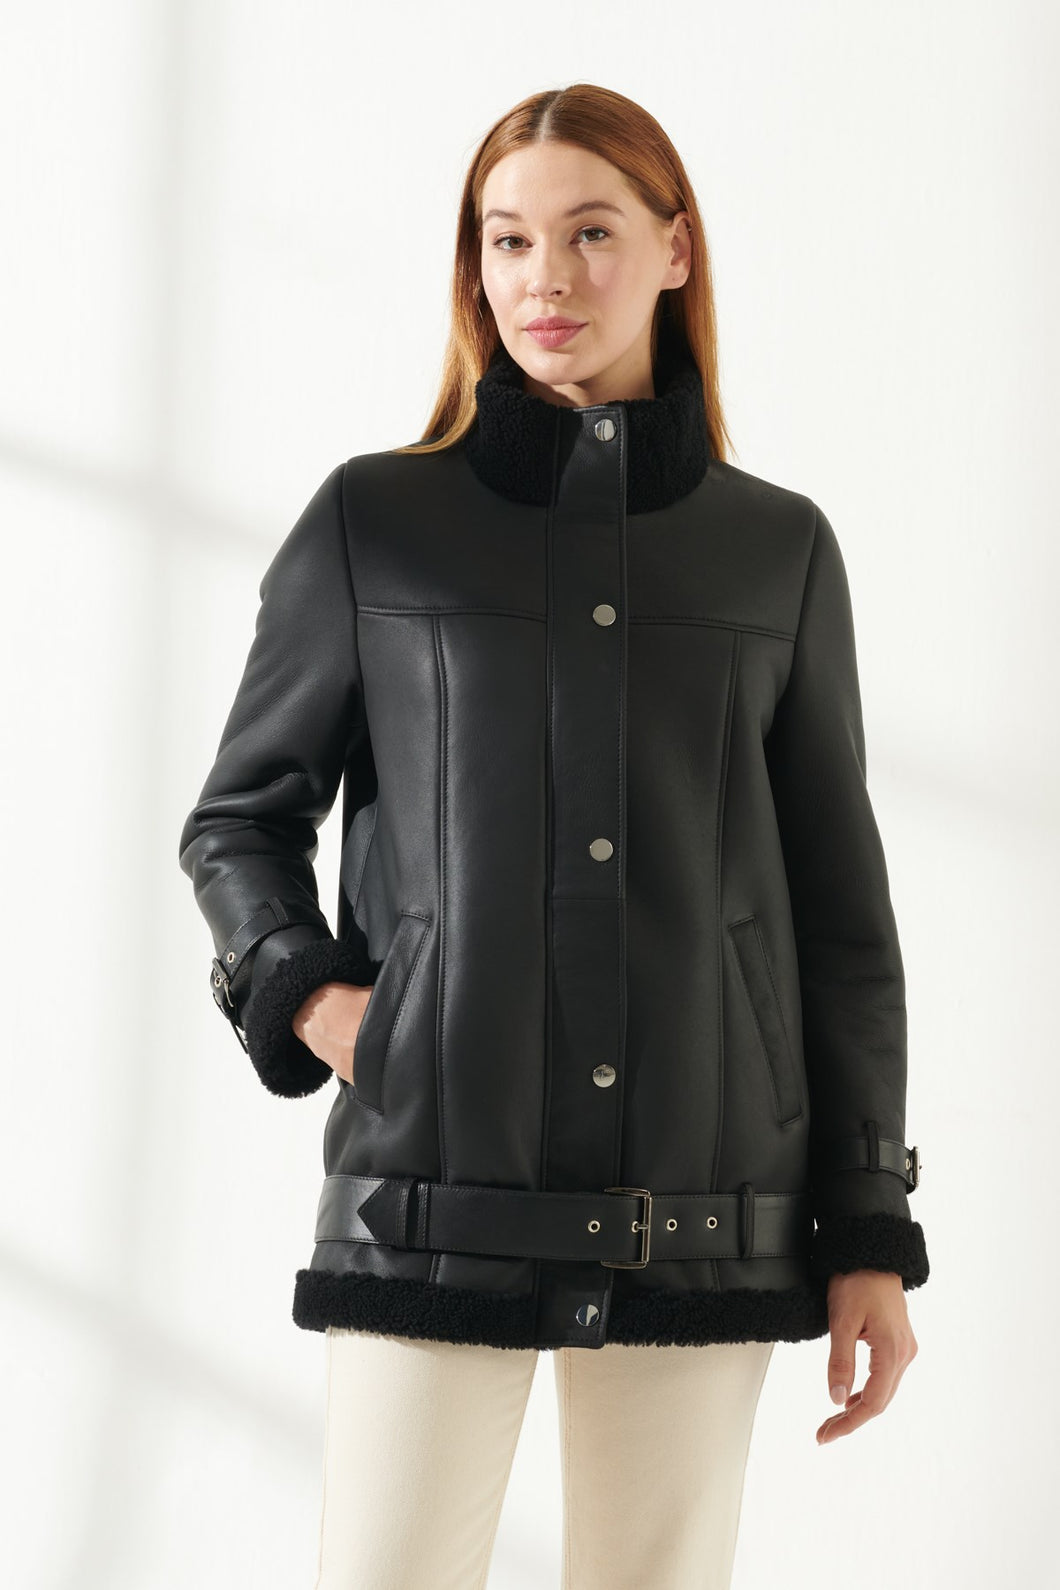 Women's Casual Black Oversized Shearling Leather Jacket